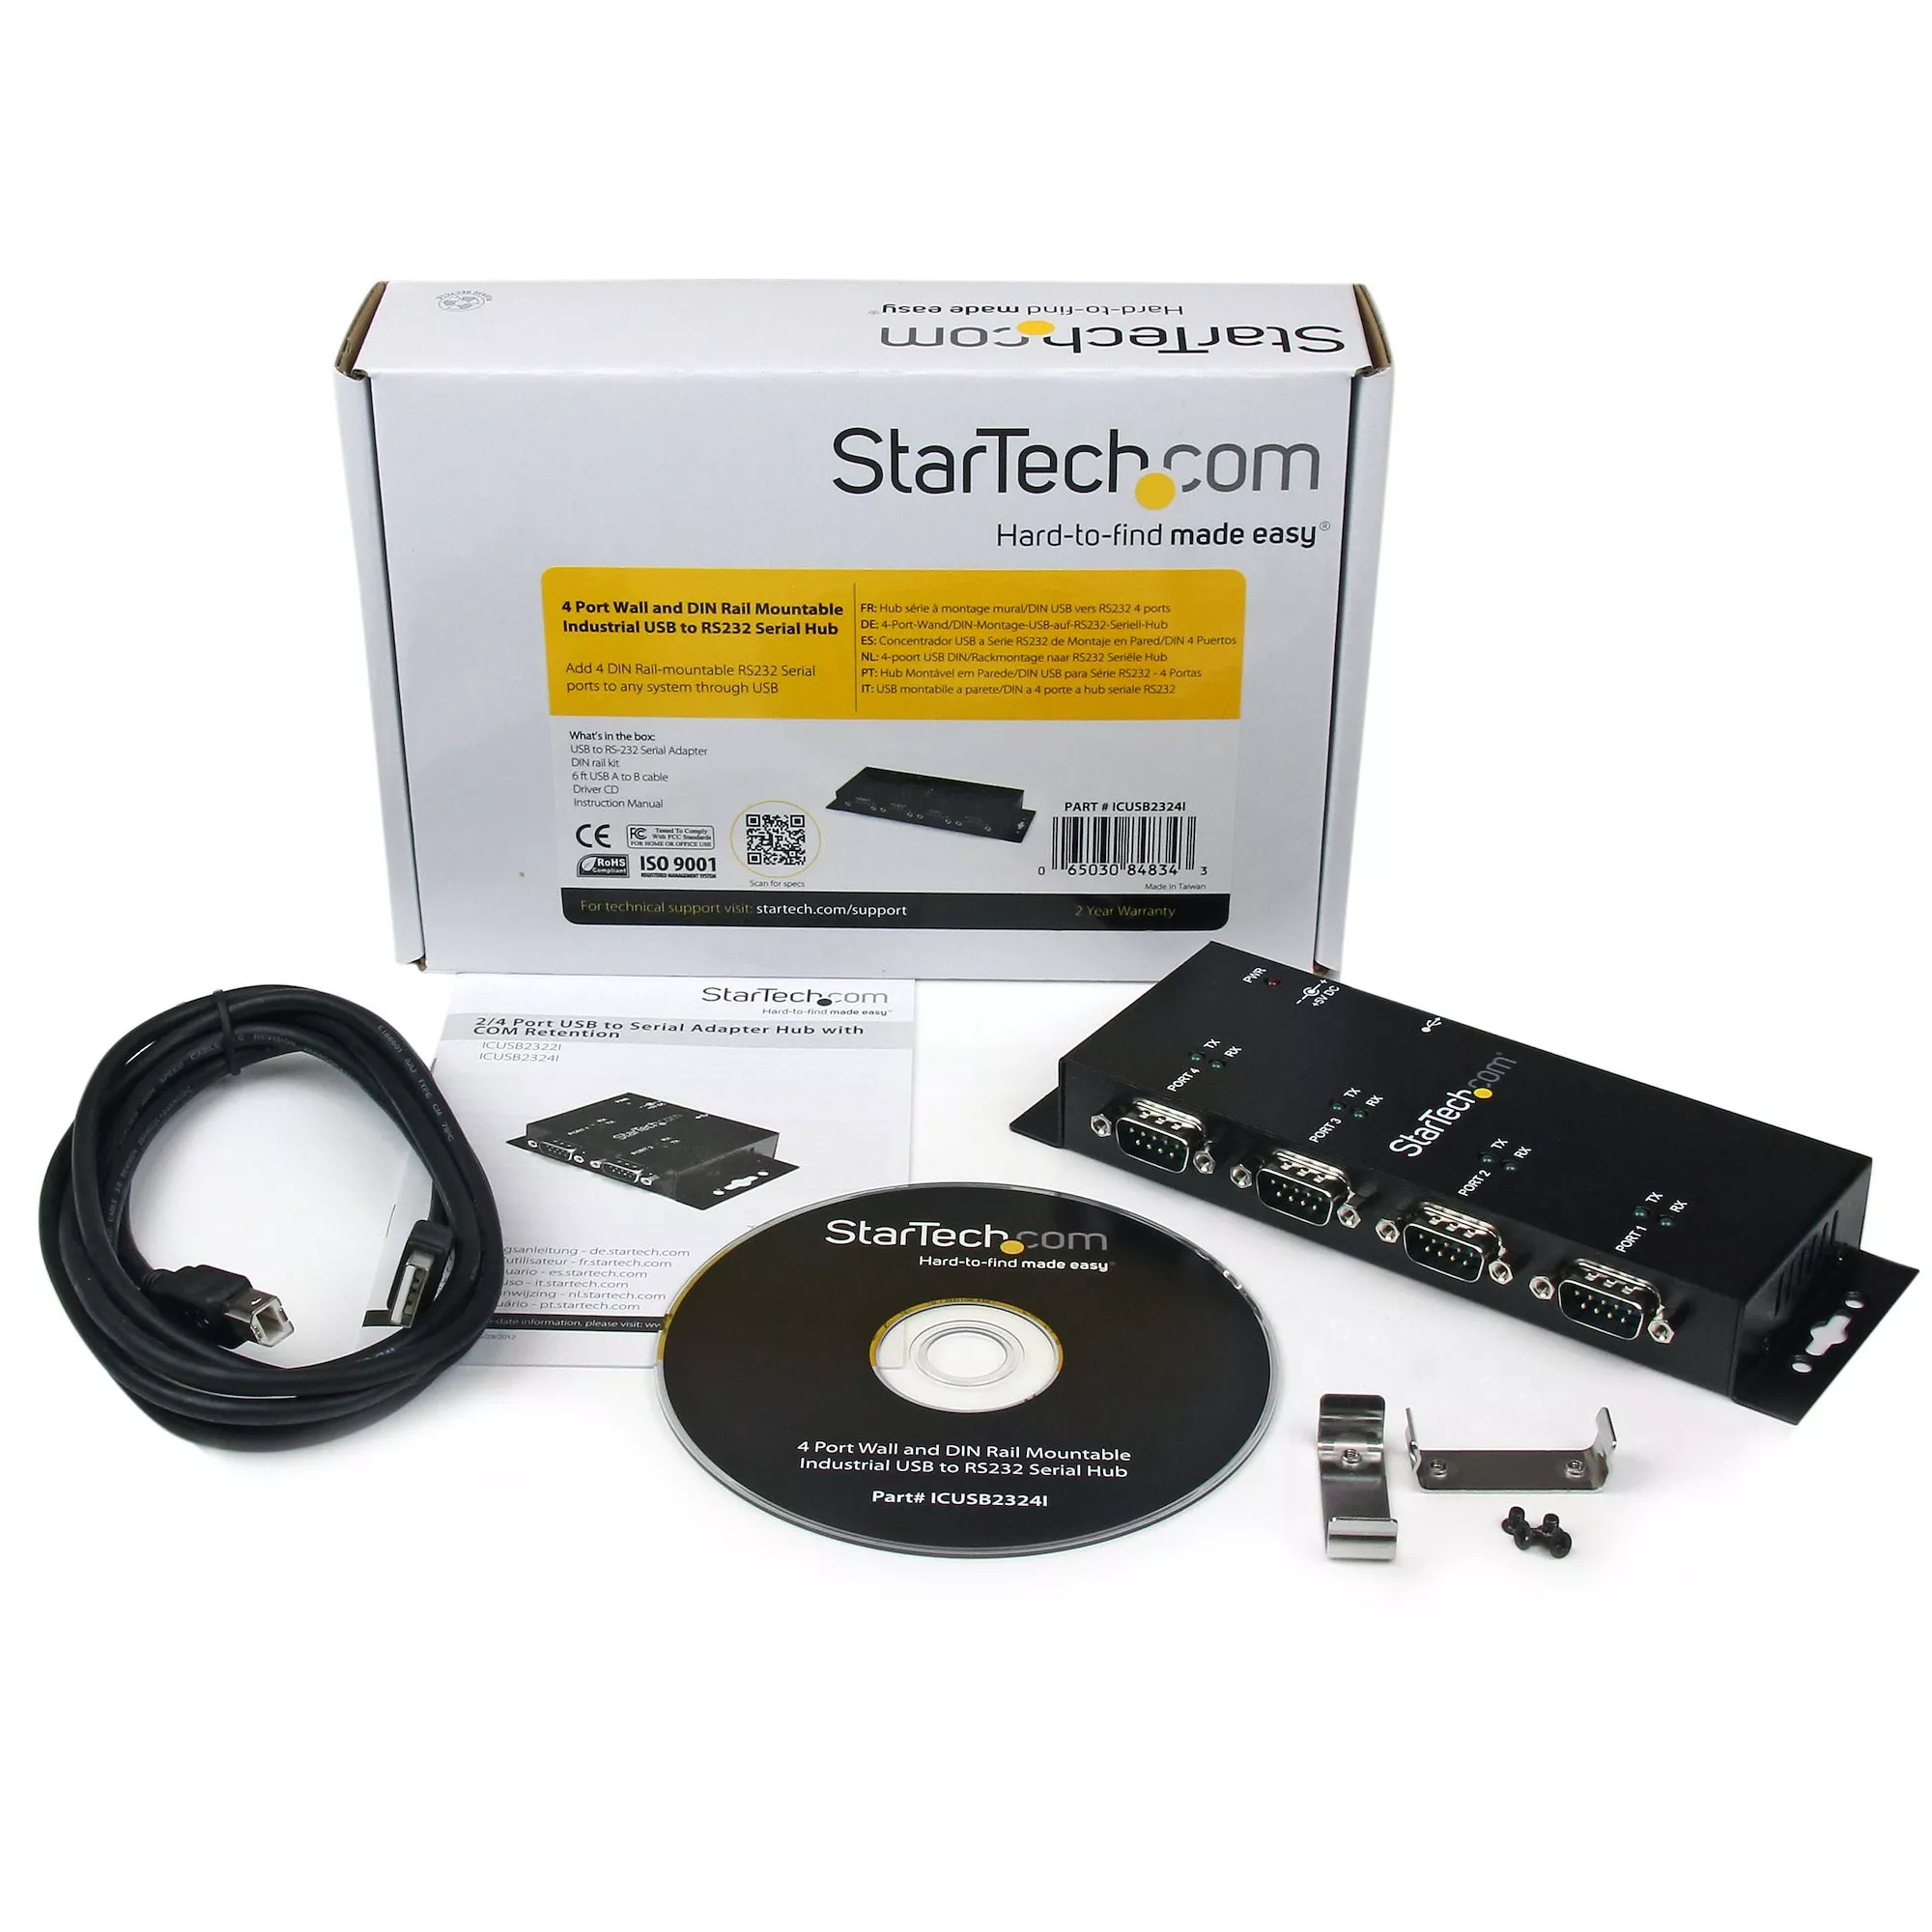 Vente StarTech.com Hub adaptateur USB vers série DB9 RS232 StarTech.com au meilleur prix - visuel 6